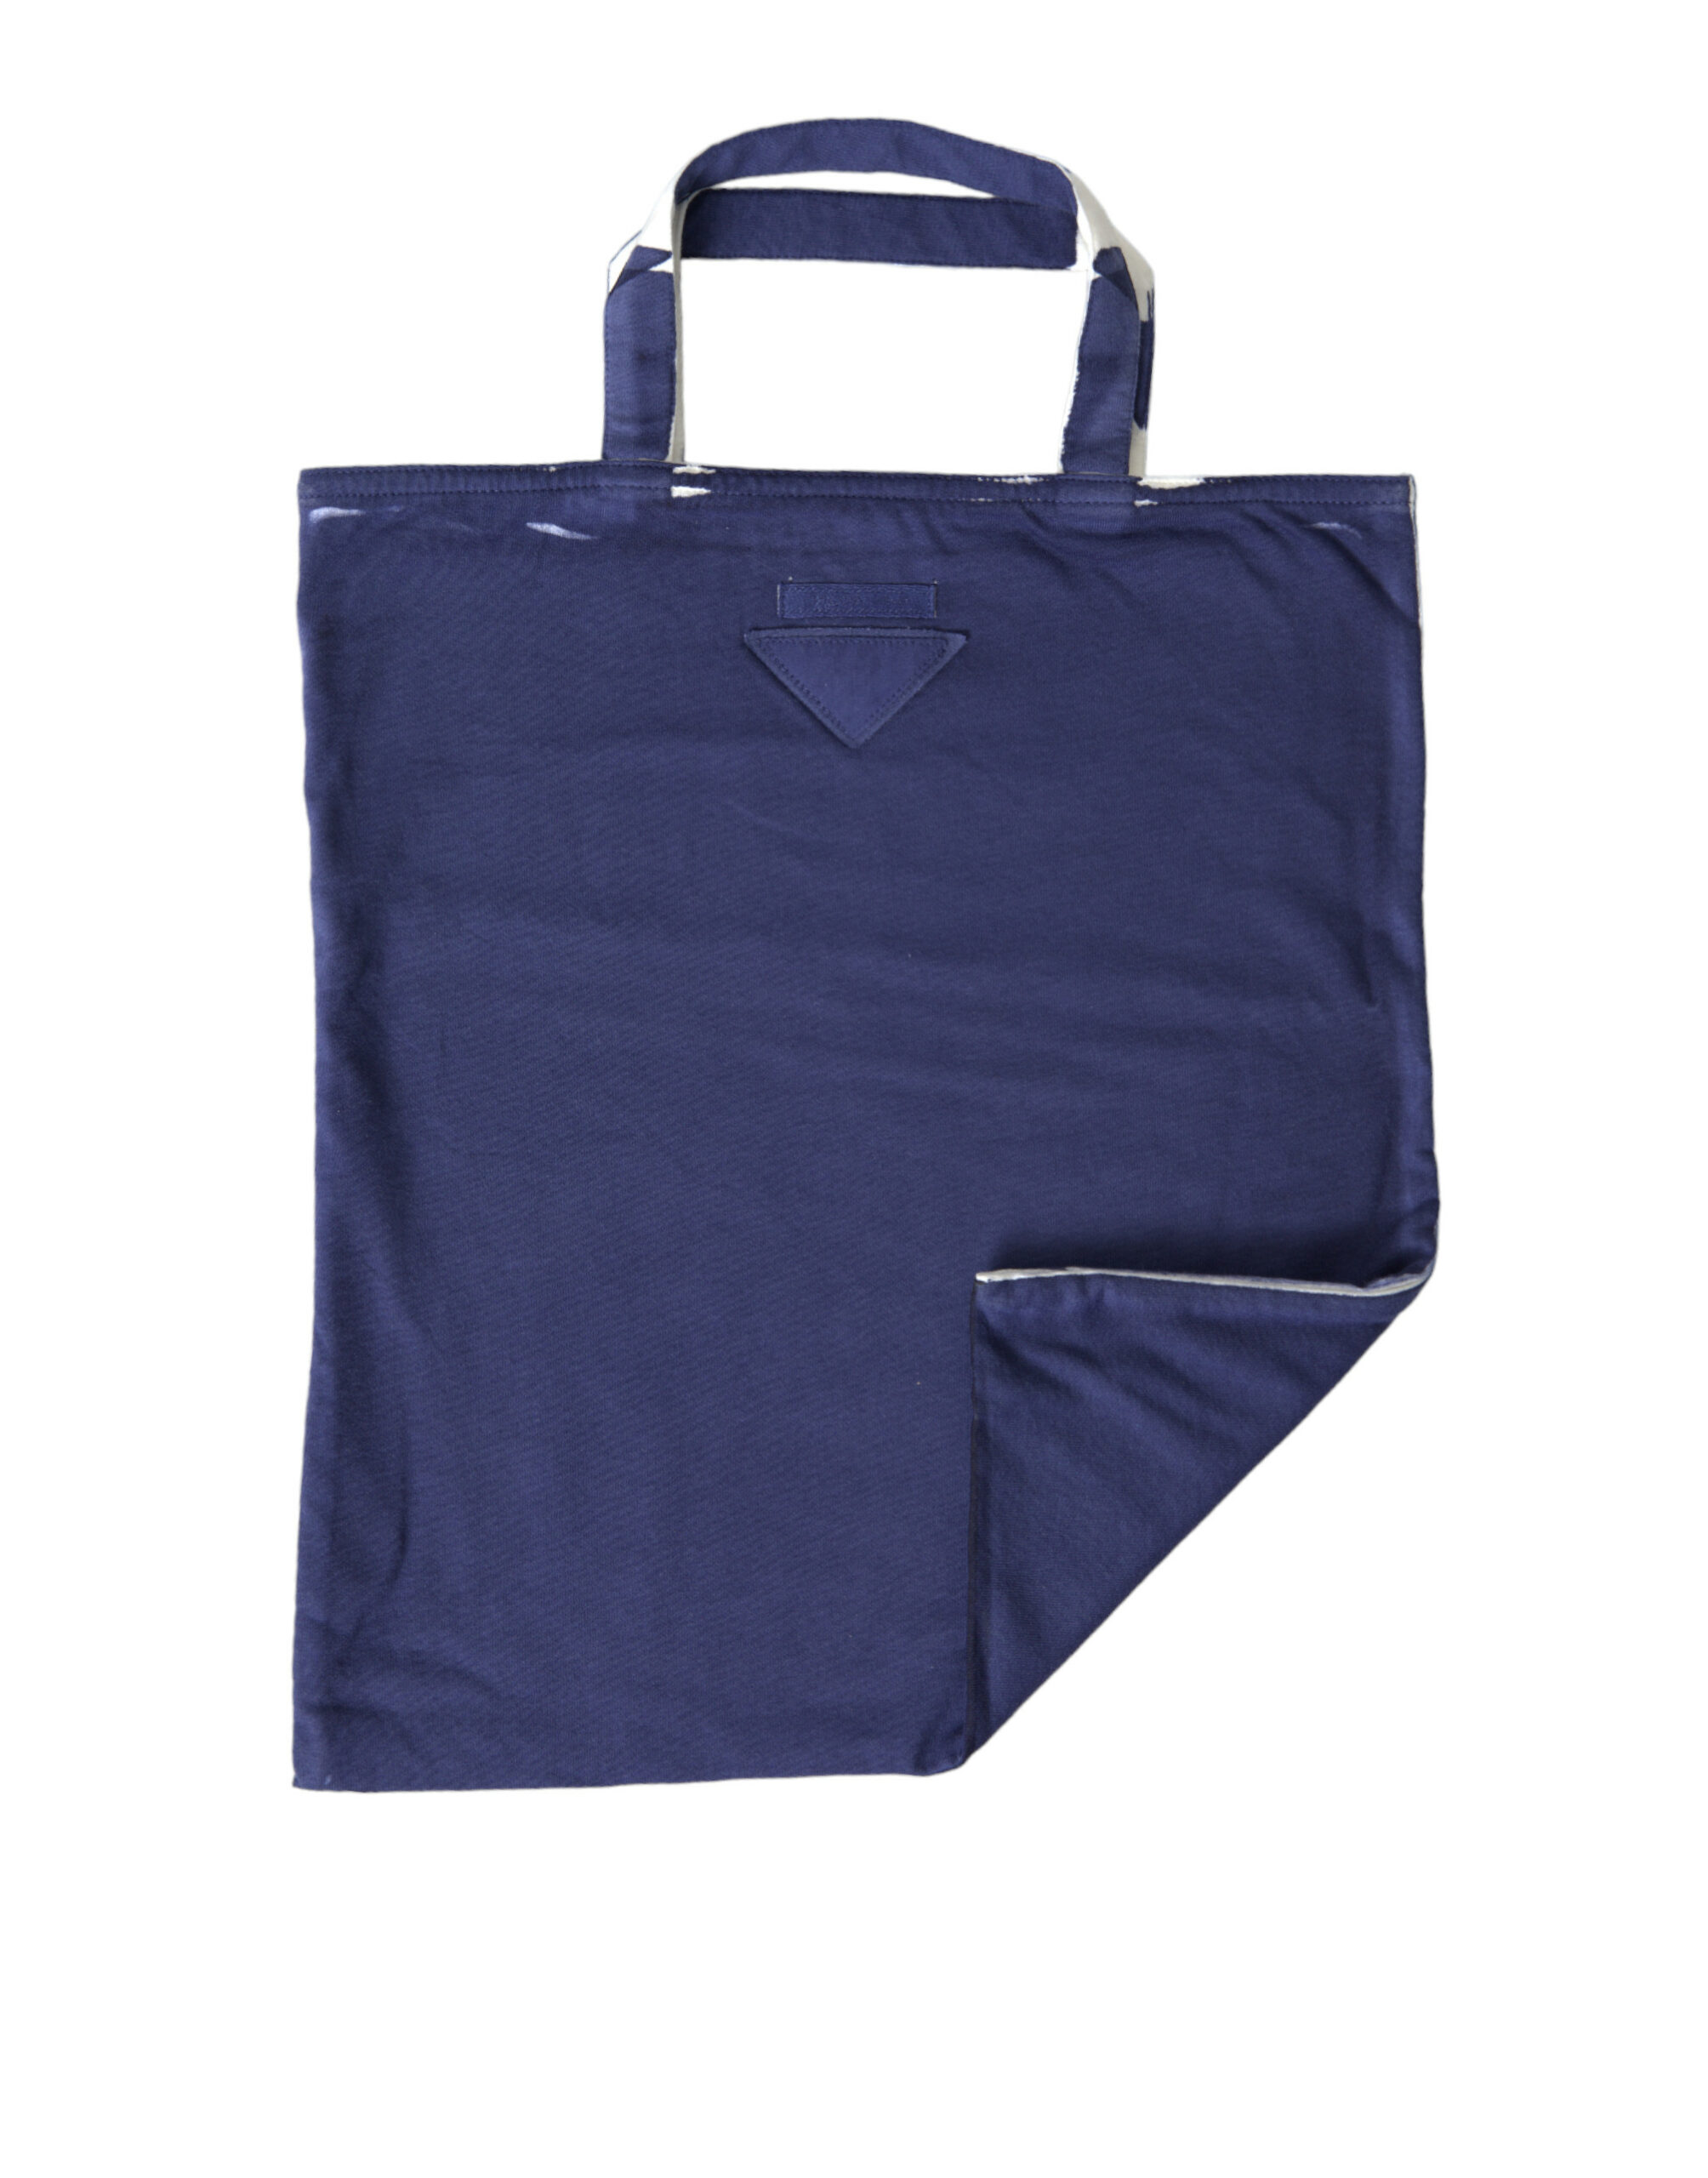 Blue Prada Elegant Blue Tote Bag for Chic Outings